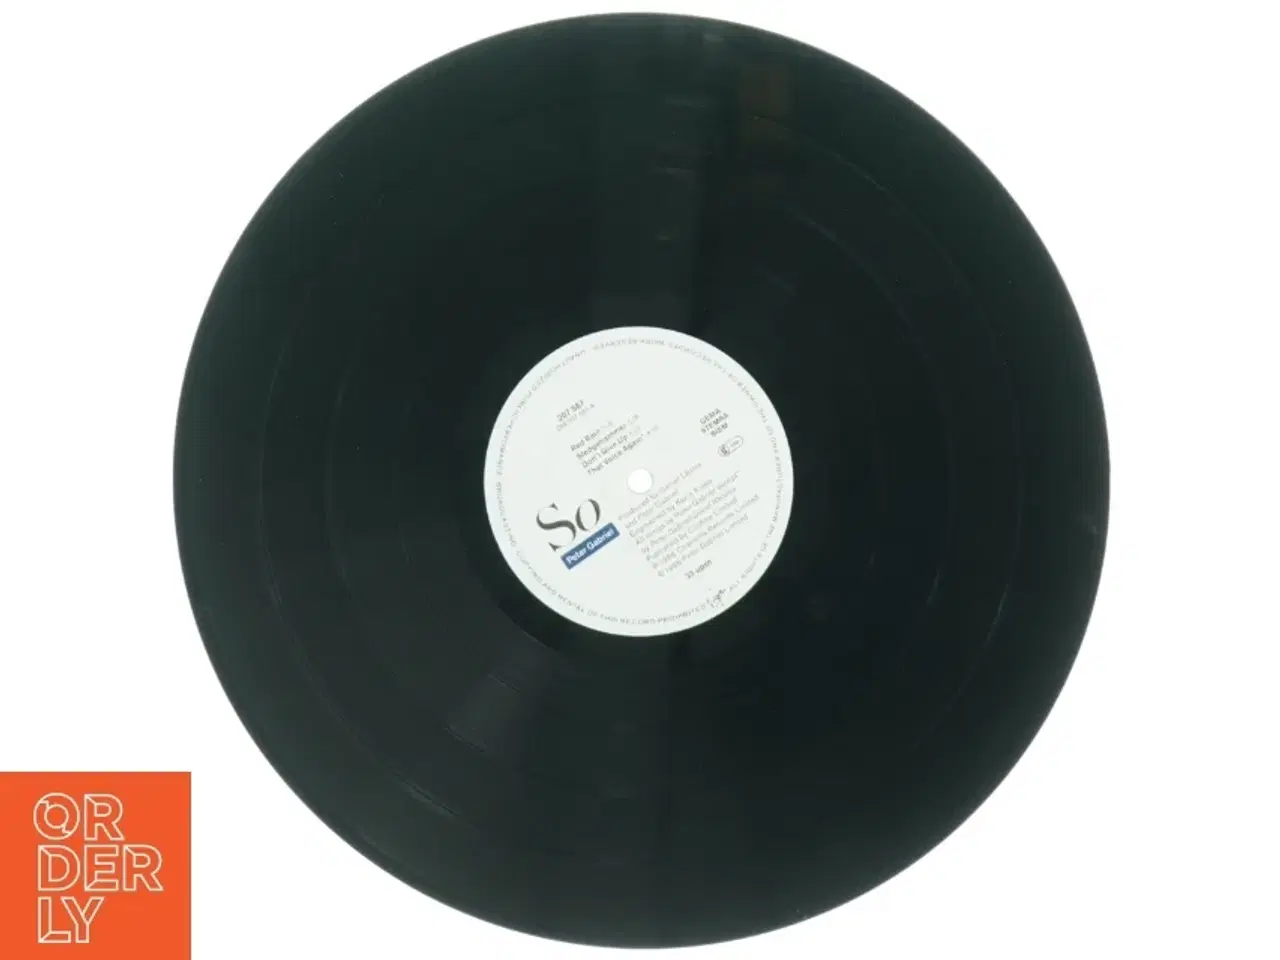 Billede 3 - Peter Gabriel 'So' Vinyl LP fra Charisma Records (str. 31 x 31 cm)